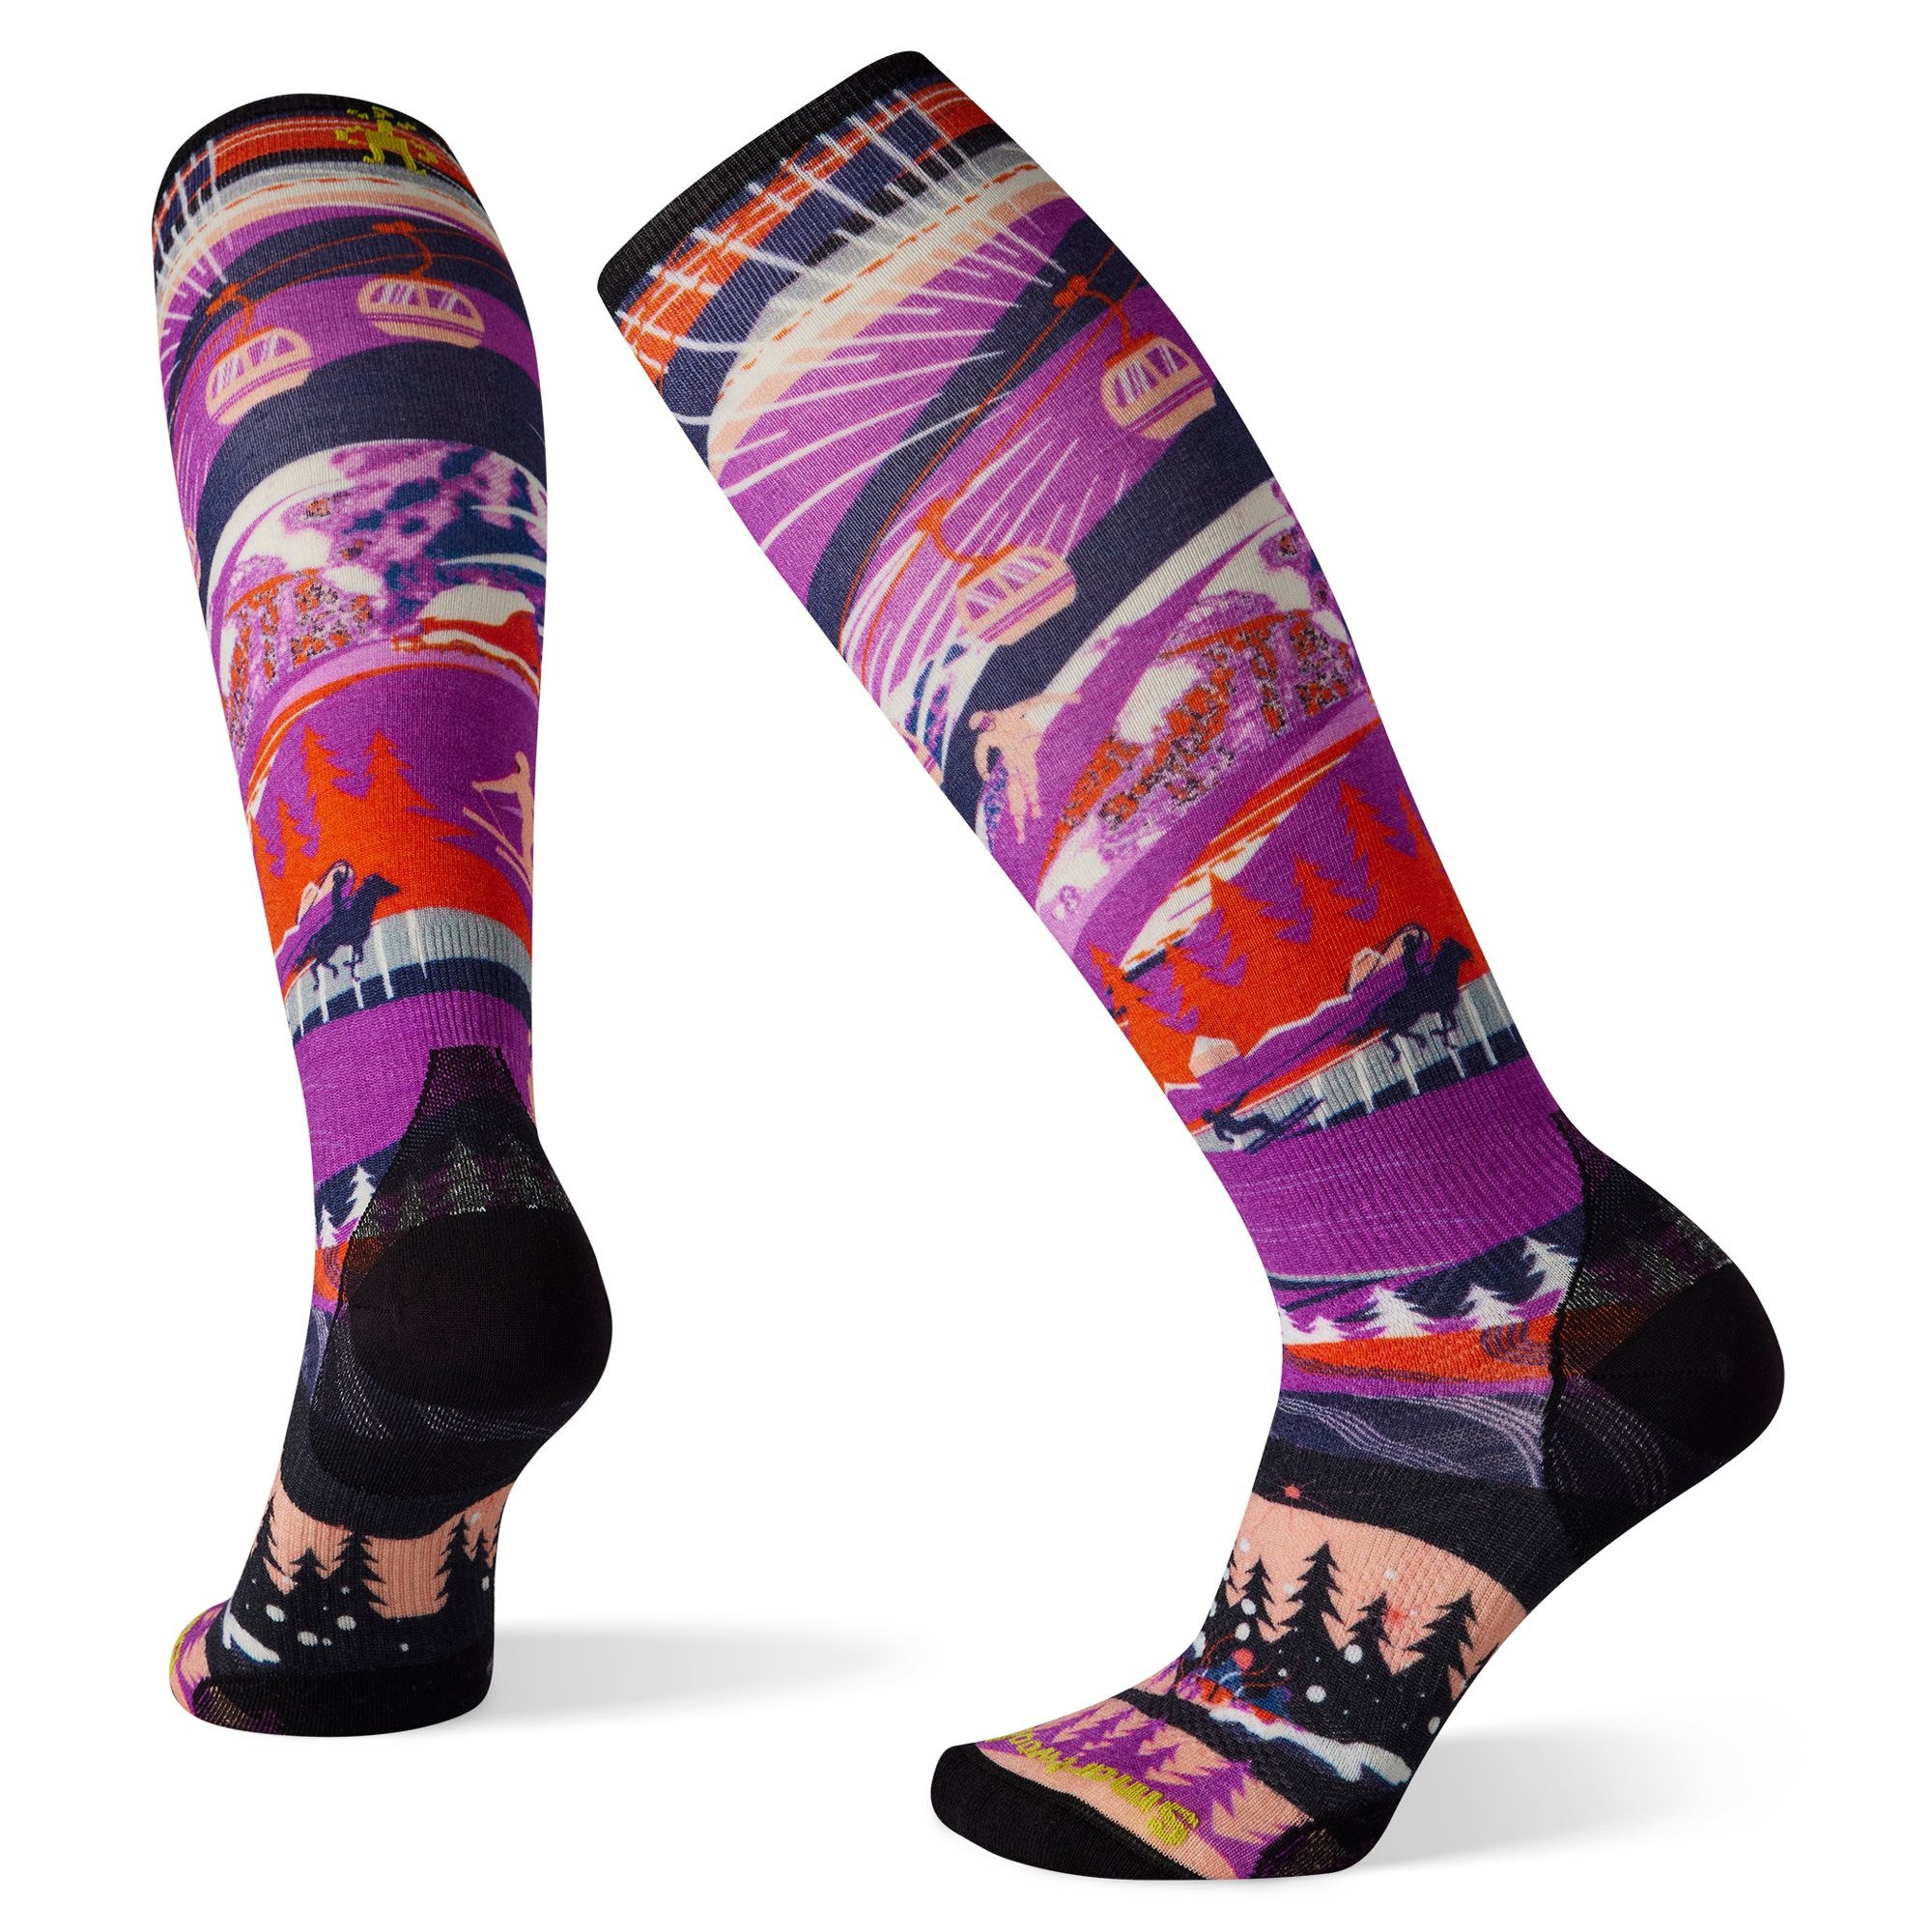 Merino Wool Women's Ski Socks: Thermal & More